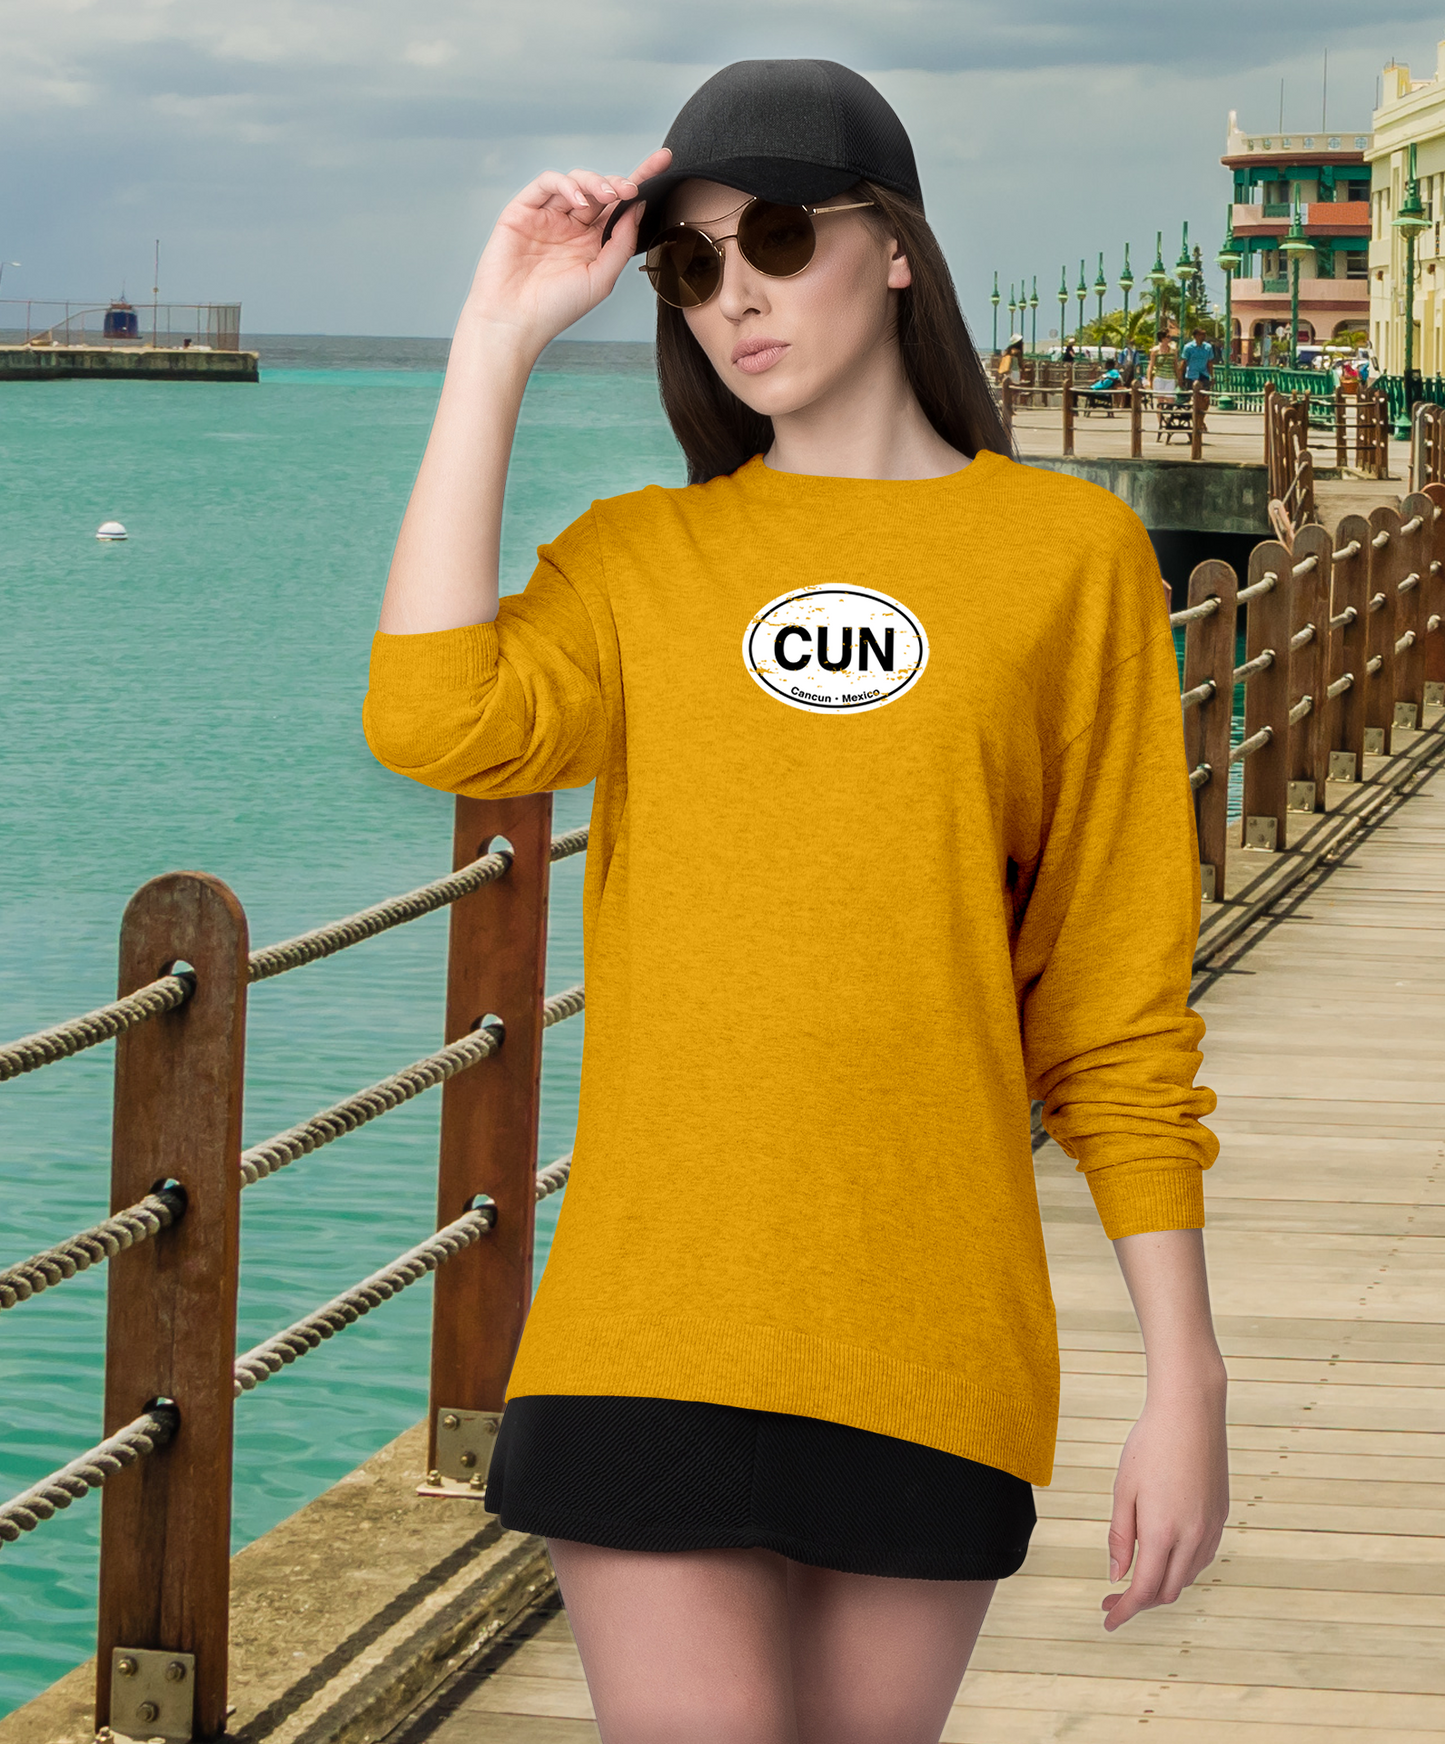 Cancun Women's Classic Long Sleeve T-Shirts - My Destination Location